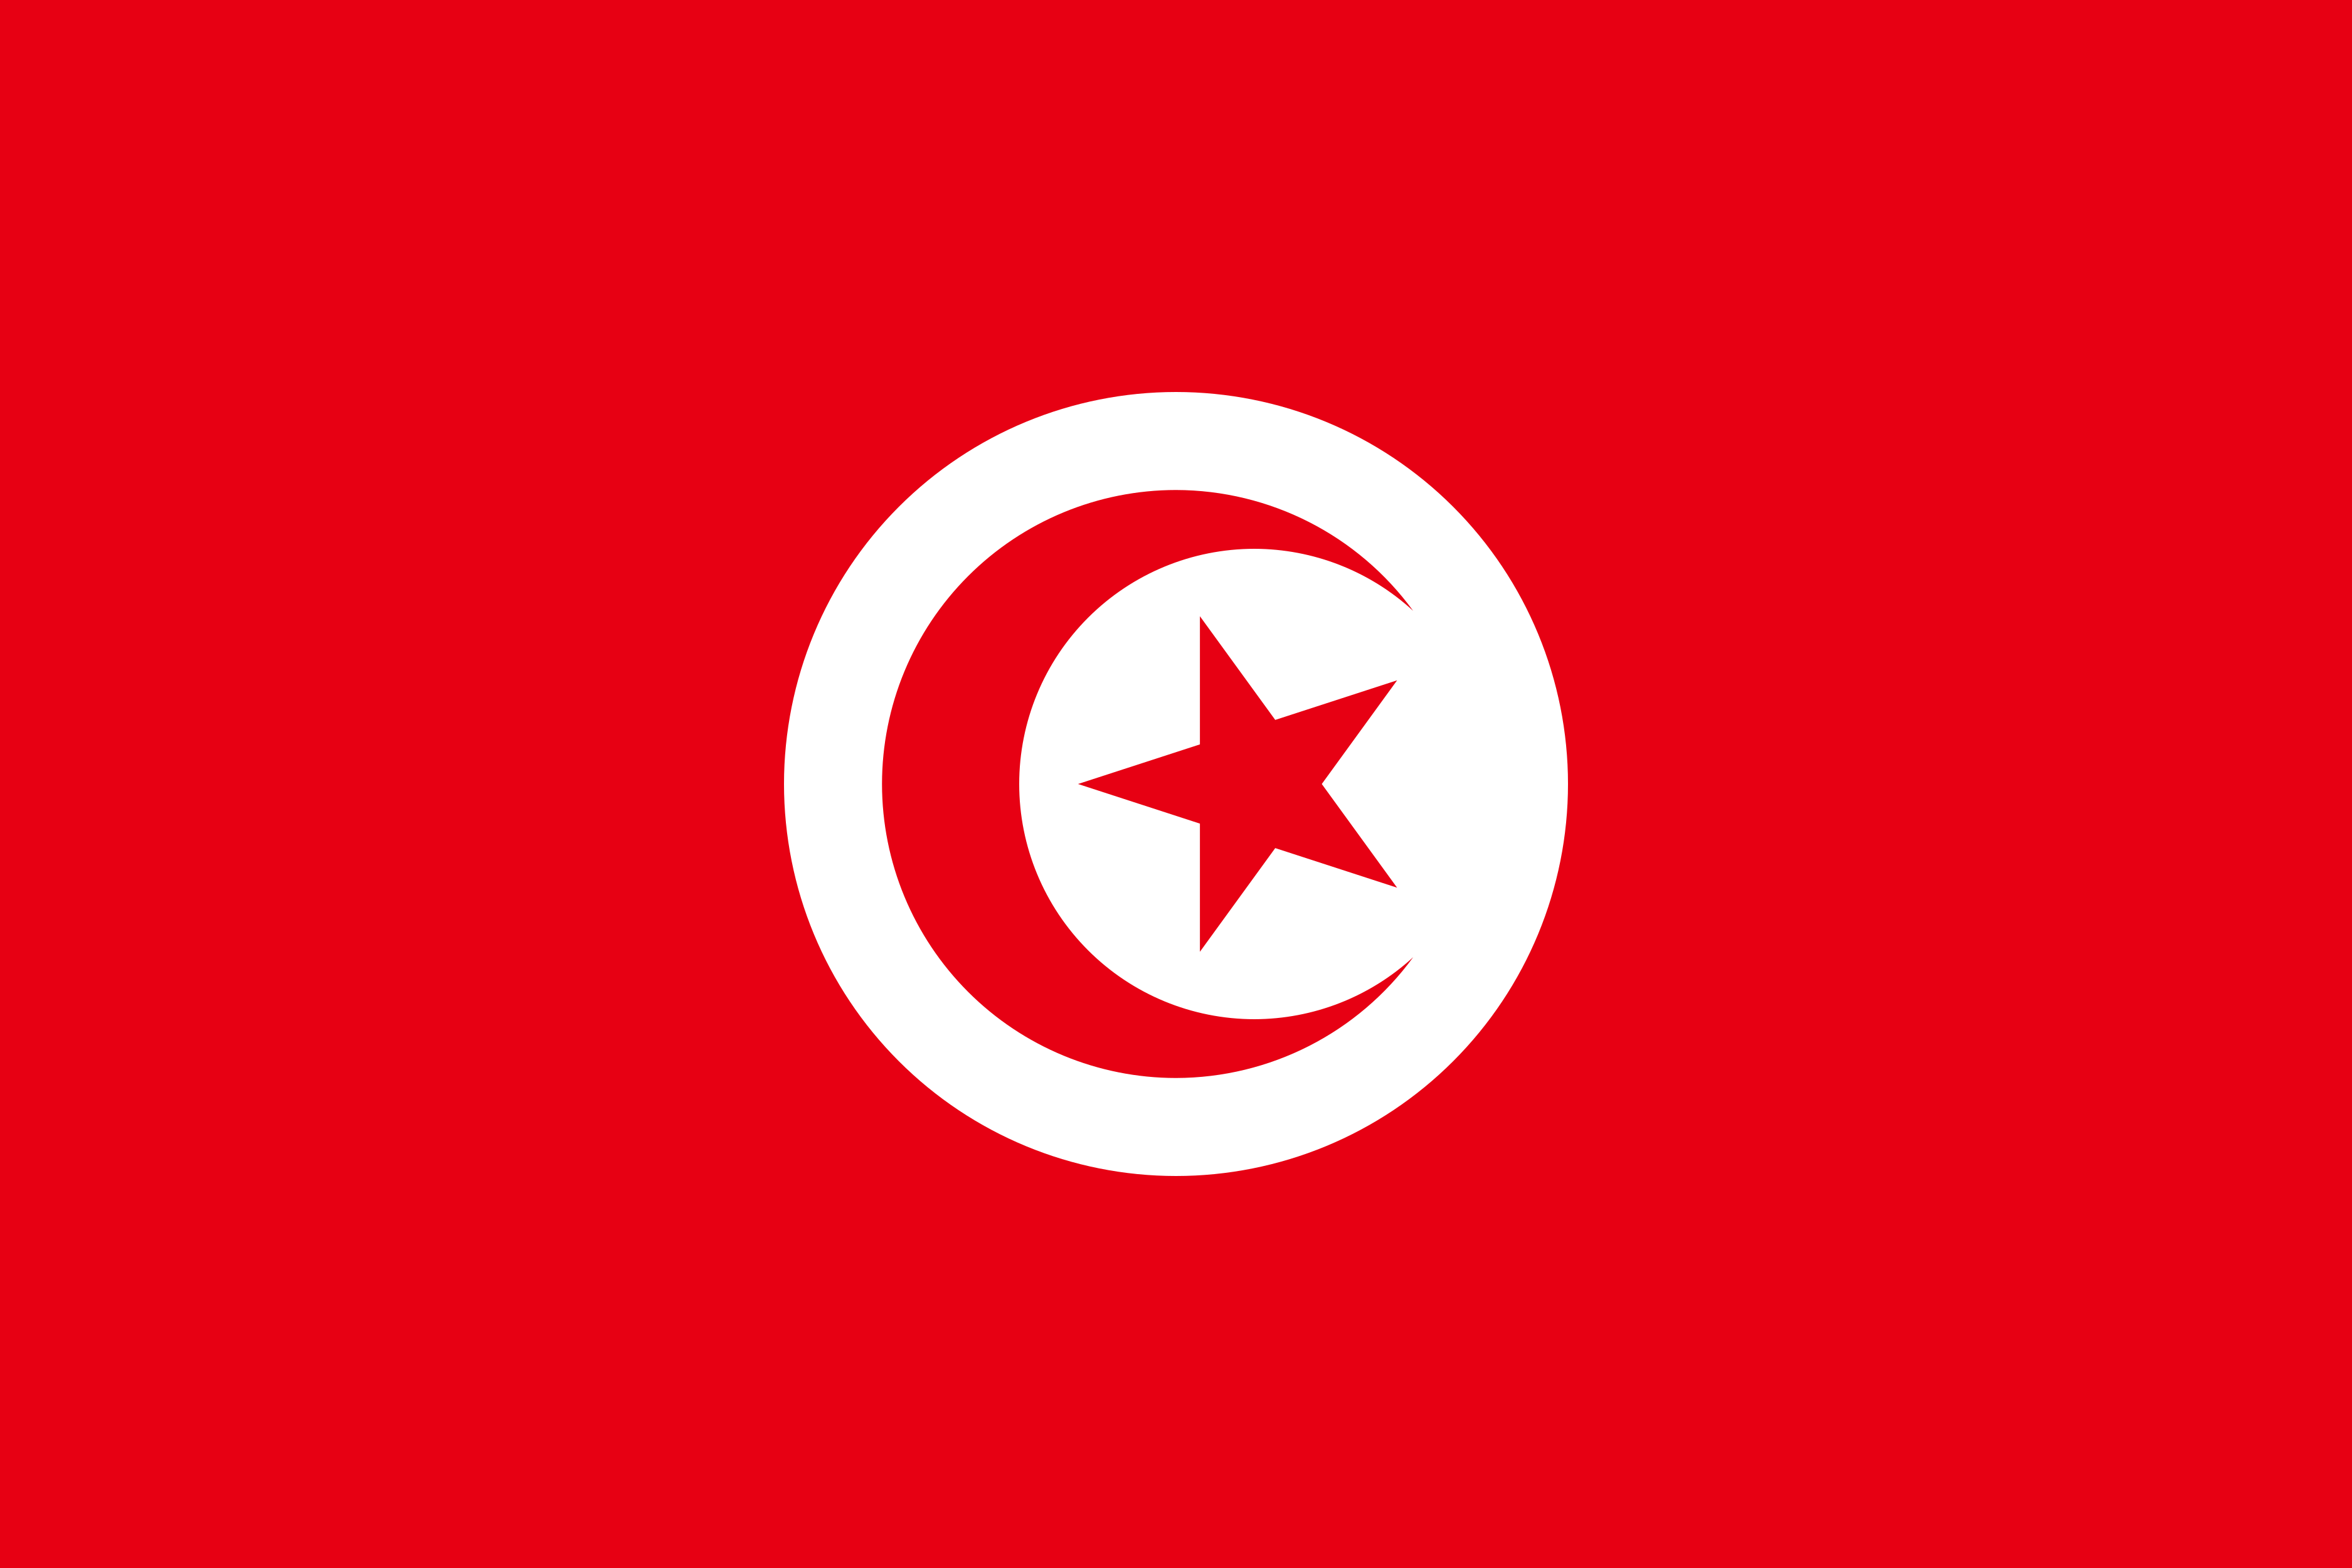 Tunisia Flag Image - Free Download